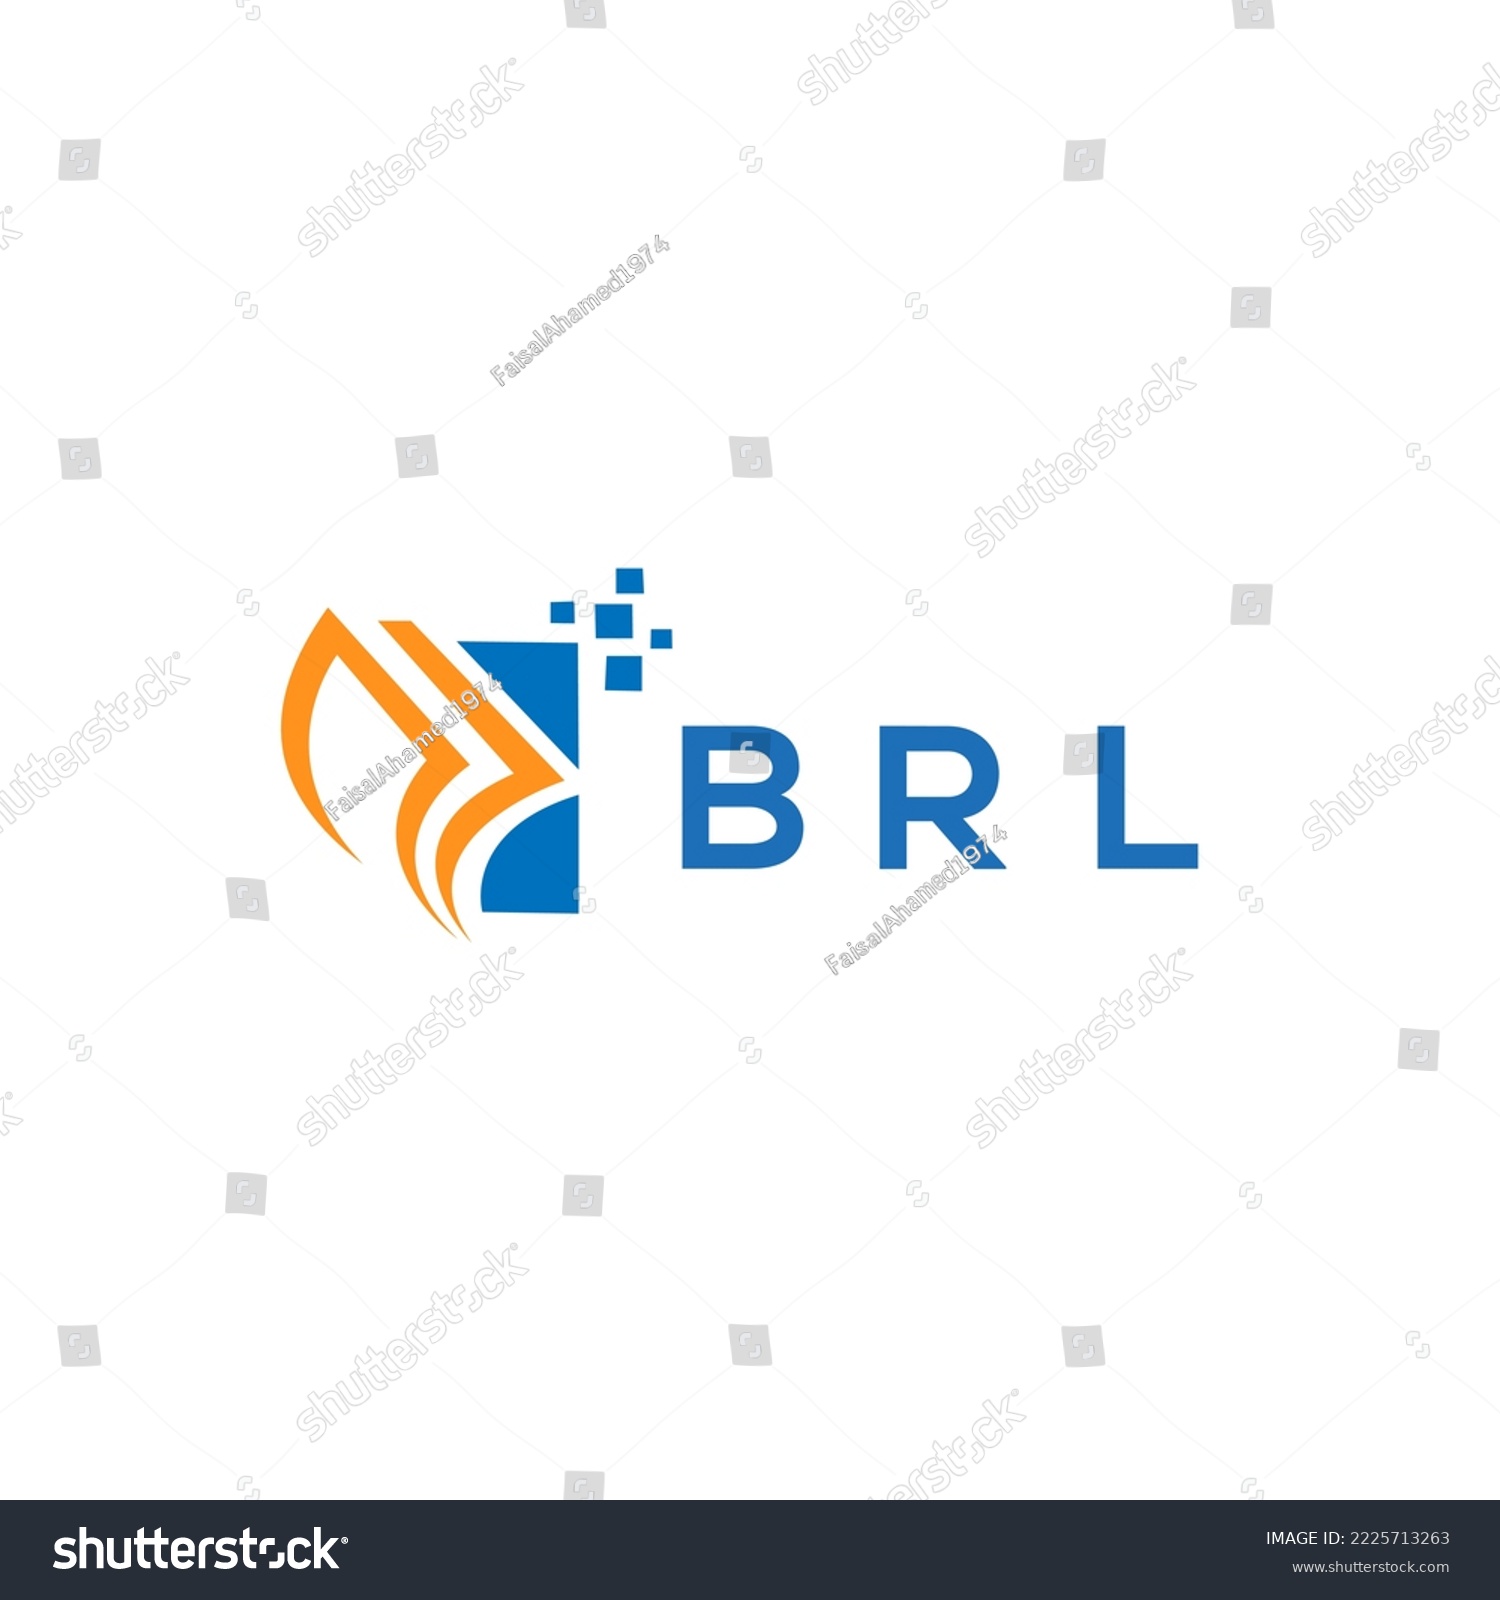 SVG of BRL credit repair accounting logo design on white background. BRL creative initials Growth graph letter logo concept. BRL business finance logo design.
 svg